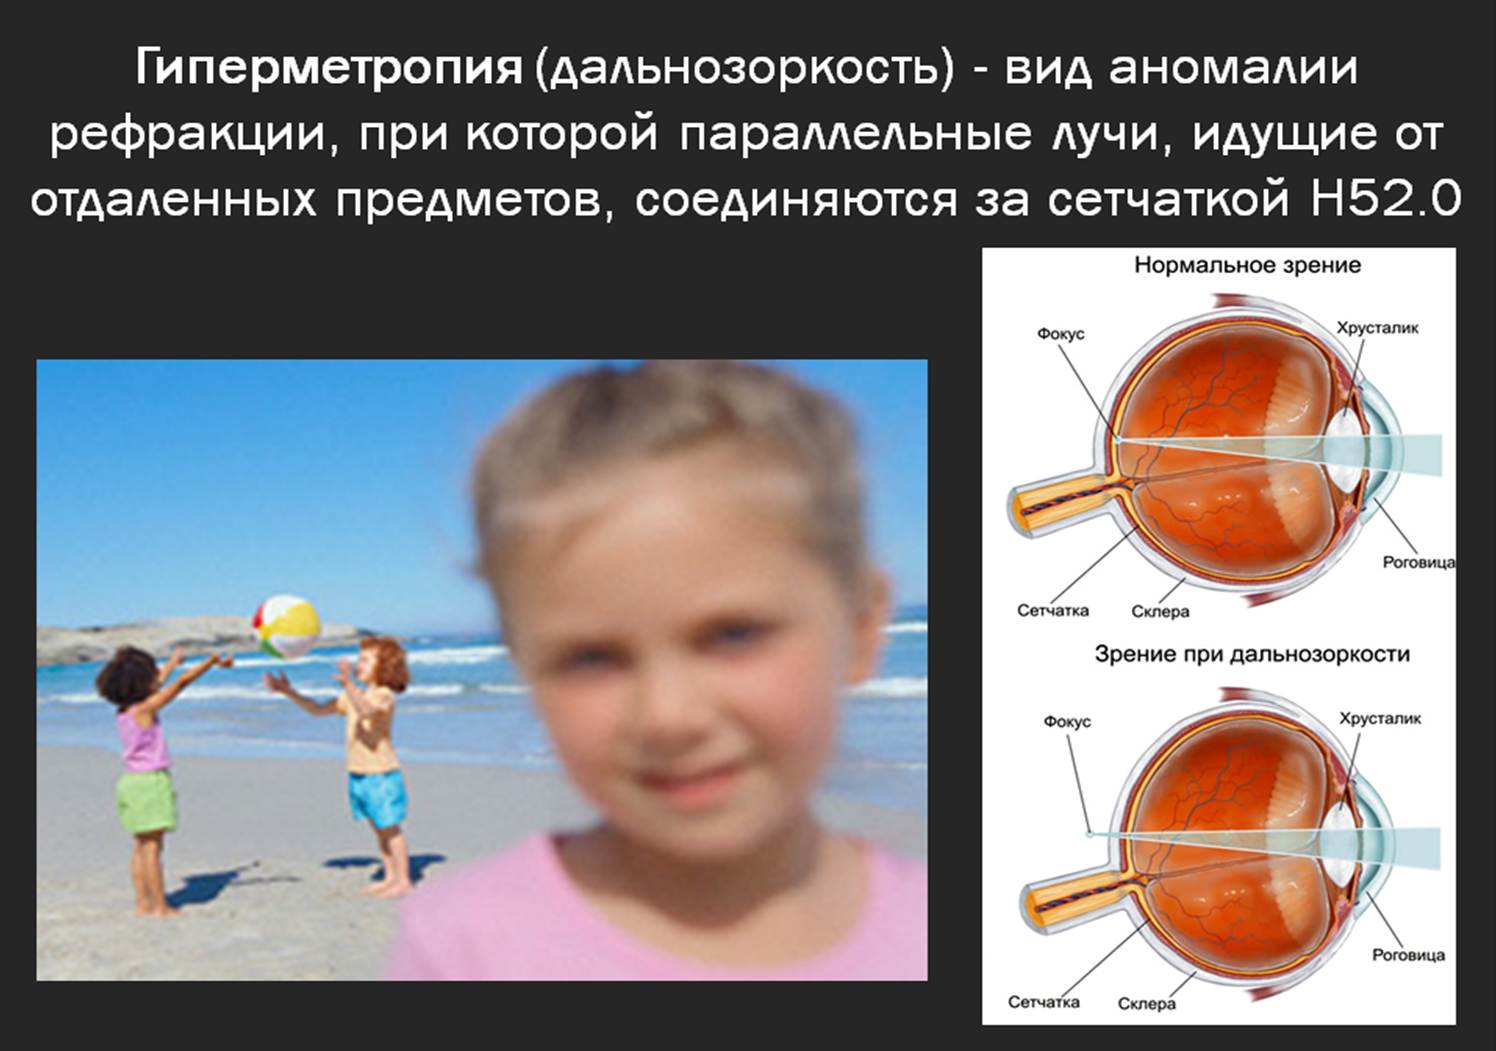 Миопия астигматизм глаз. Гиперметропия слабой степени ou у детей. Глаз гиперметропия высокой степени. Дальнозоркость слабой степени. Осложнения гиперметропии.